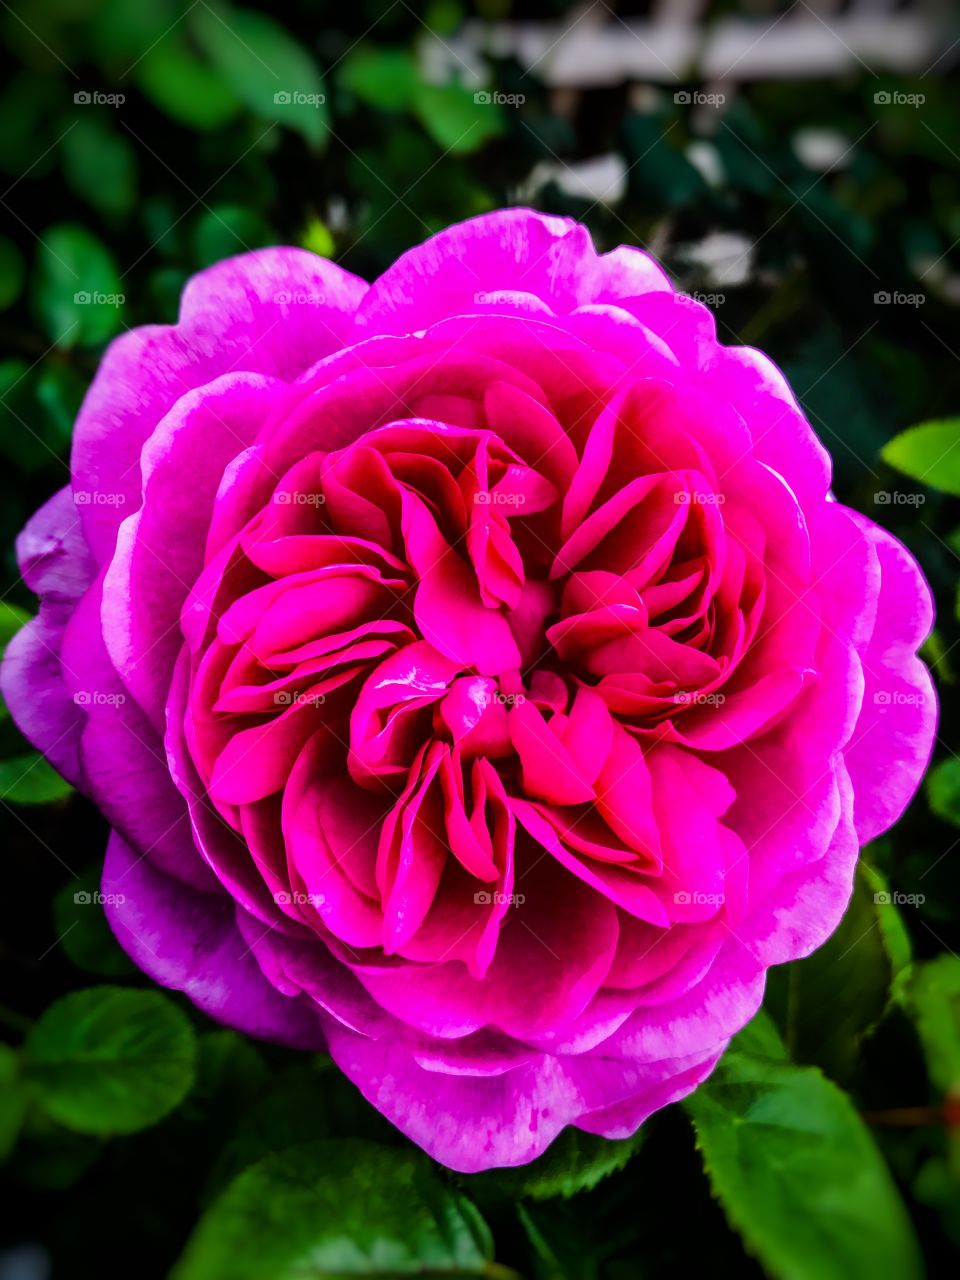 Rose close up 